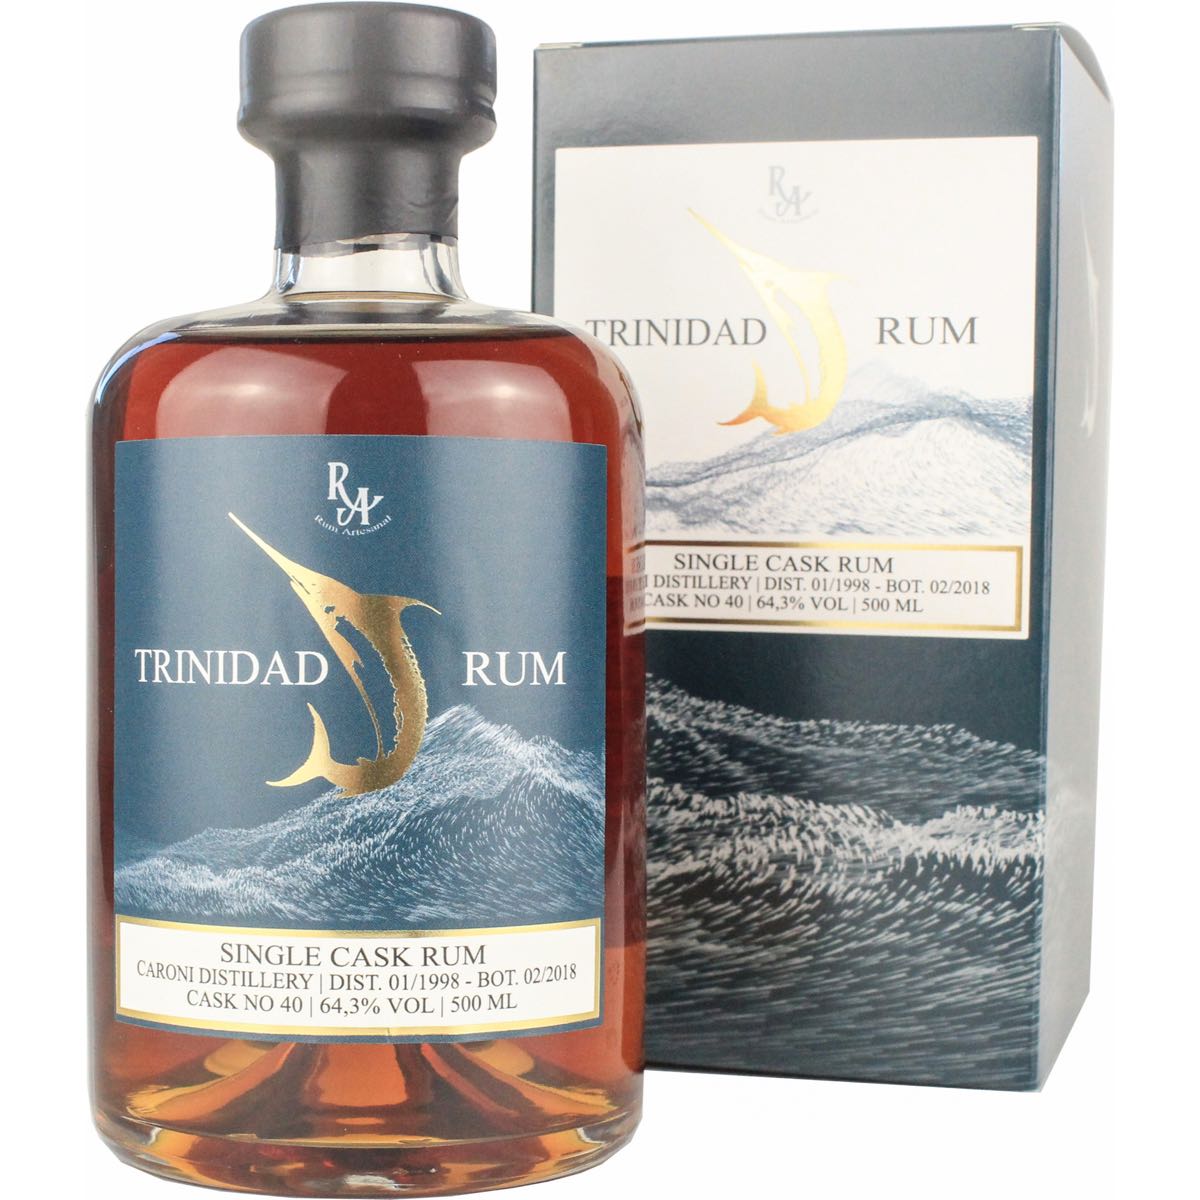 Bottle image of Rum Artesanal Trinidad Rum HTR